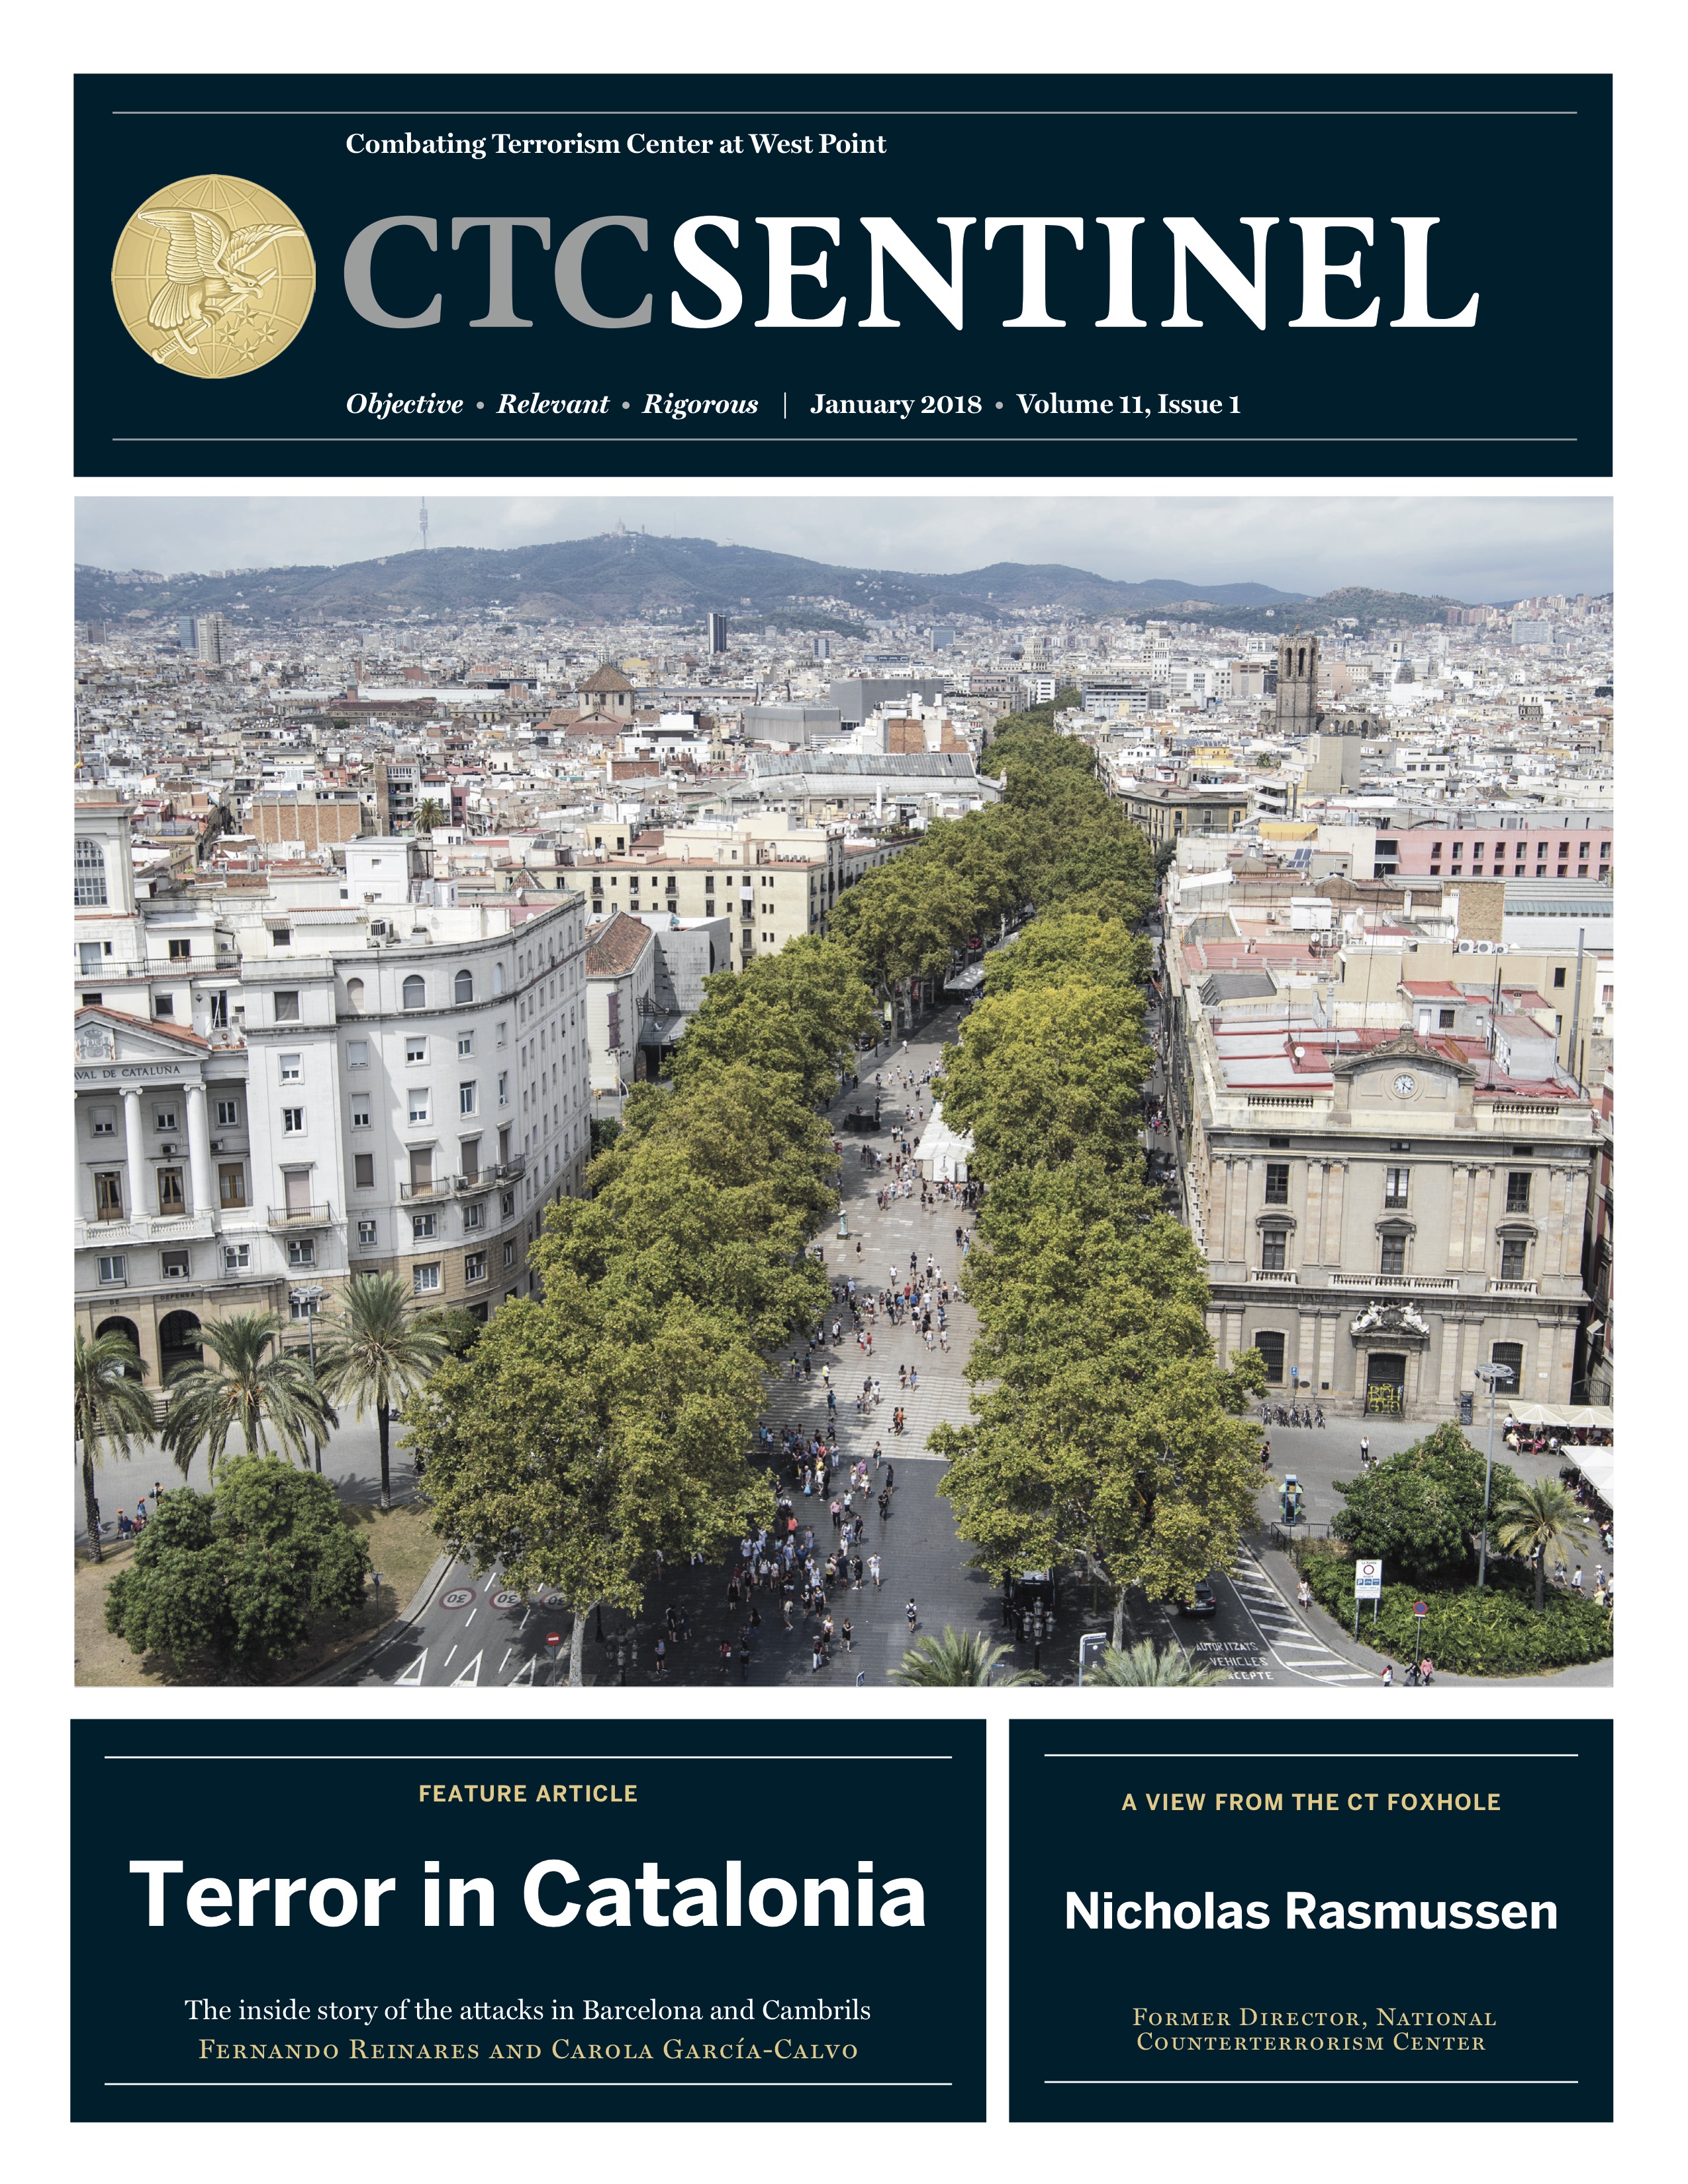 Catalan police arrest over 17 people during anti-terrorist raid in